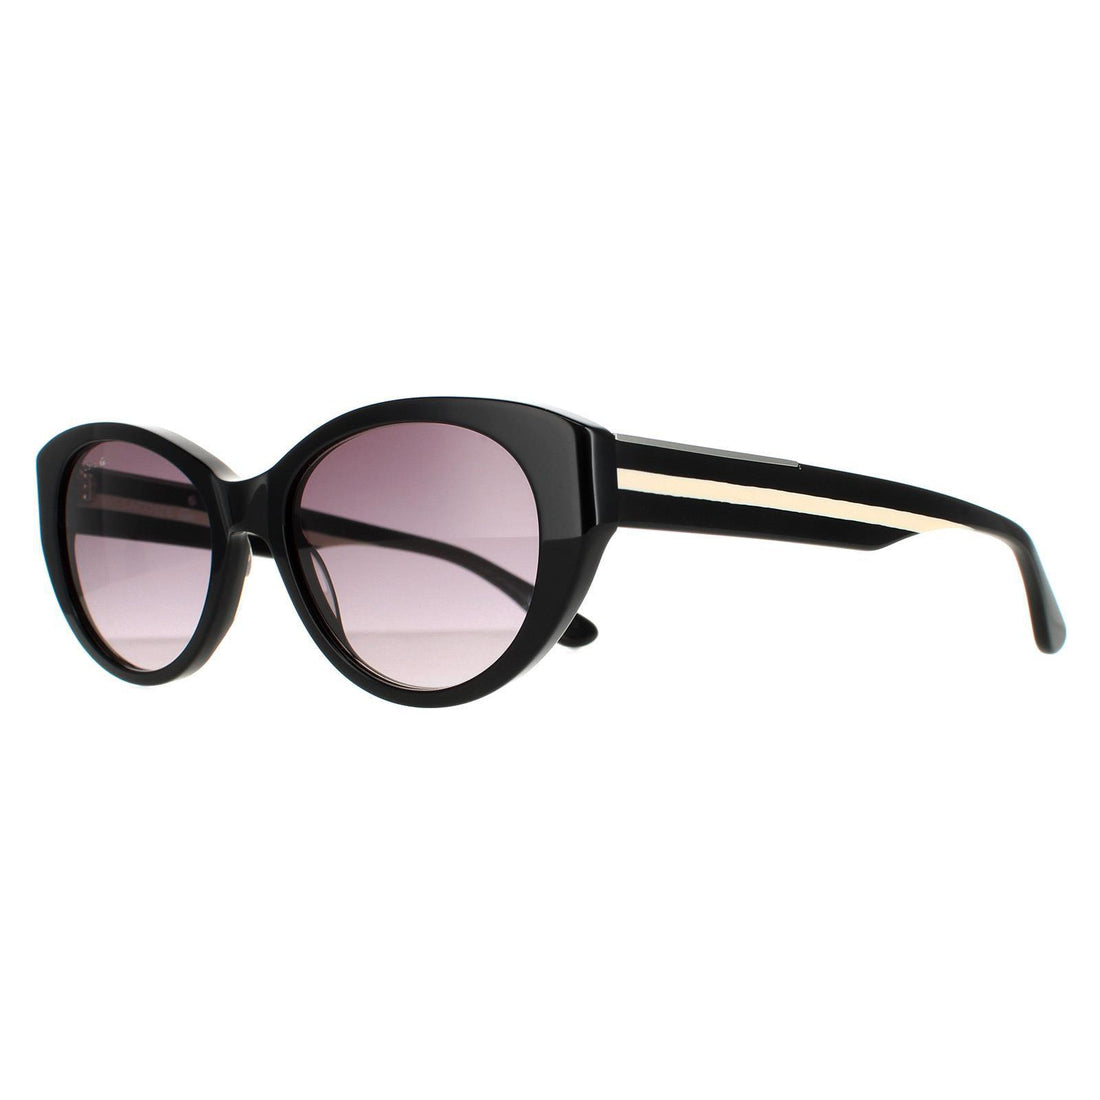 Lacoste Sunglasses L912S 001 Black Grey Gradient